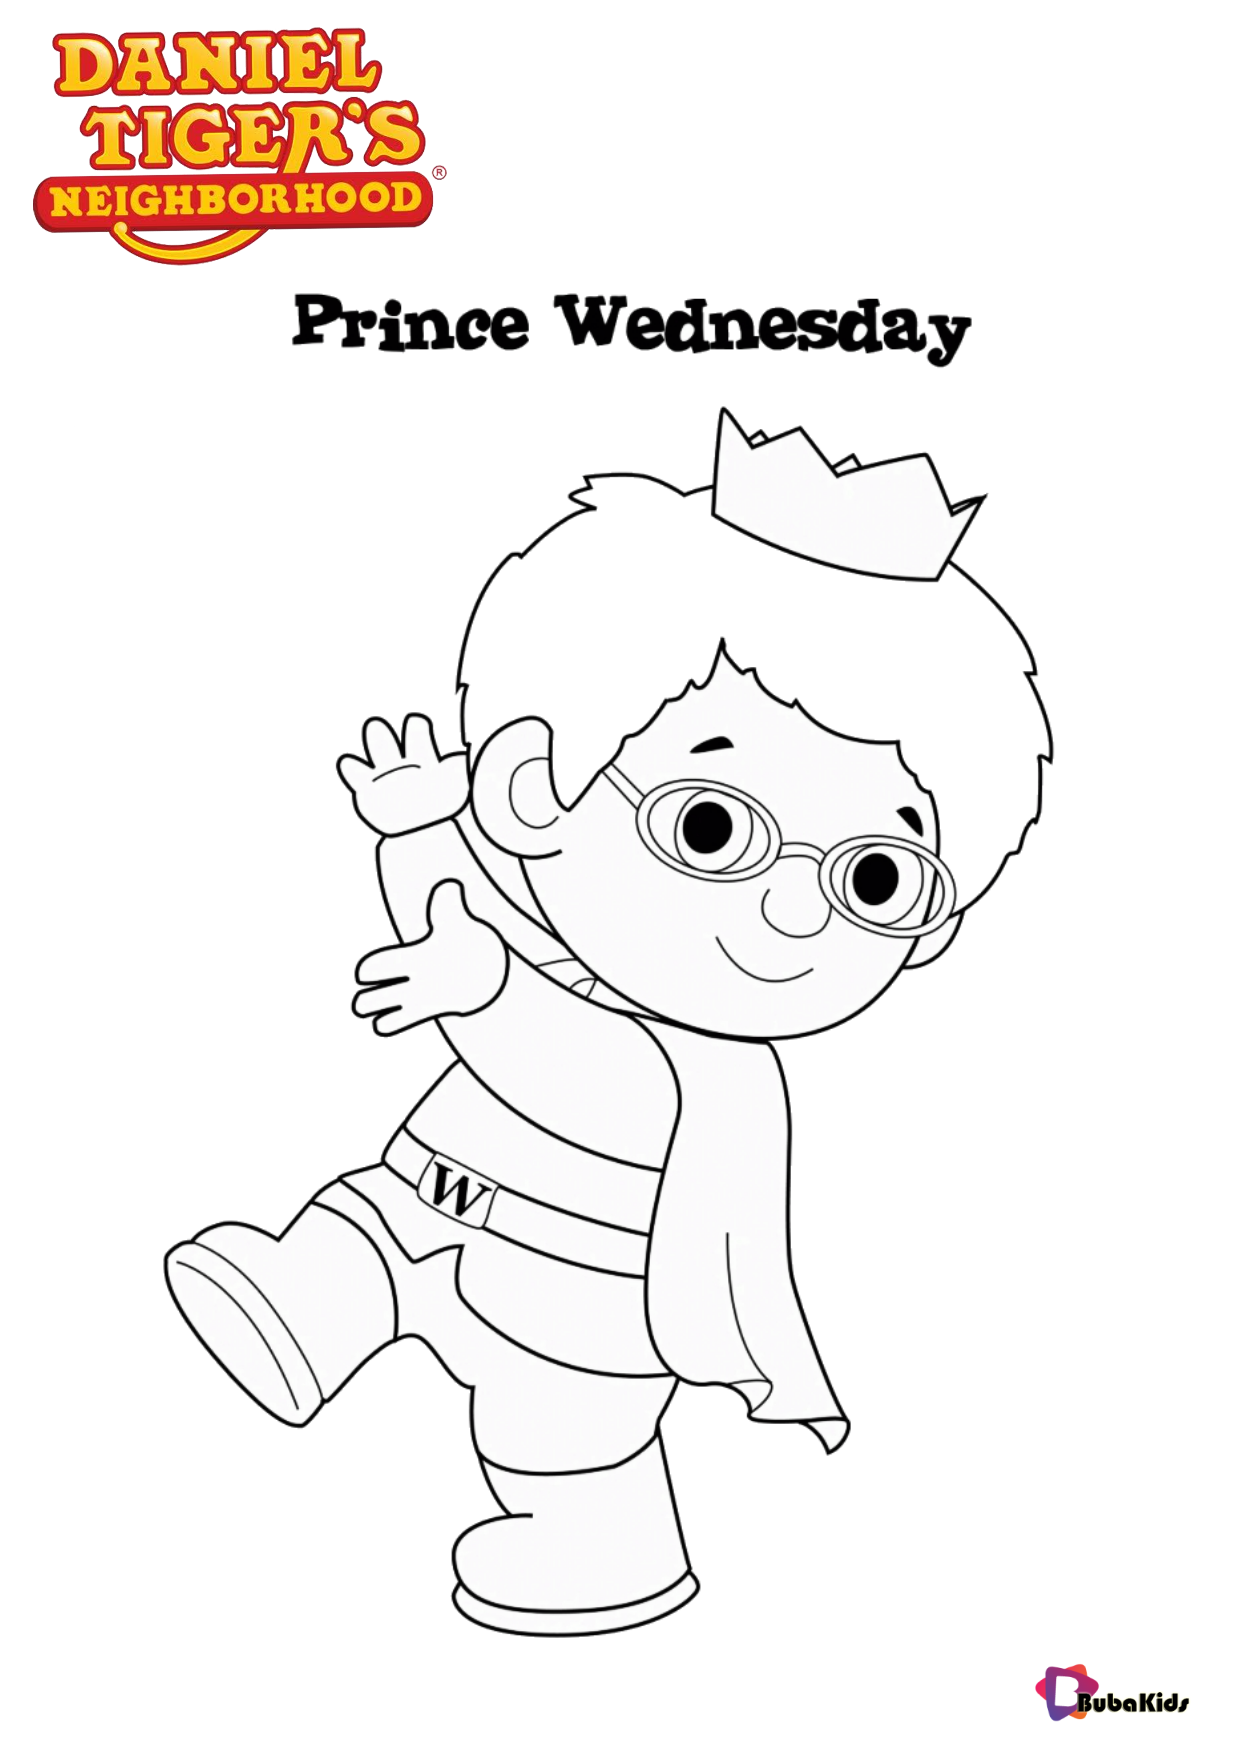 Prince Wednesday coloring page tv serial Daniel Tiger’s Neighborhood Wallpaper